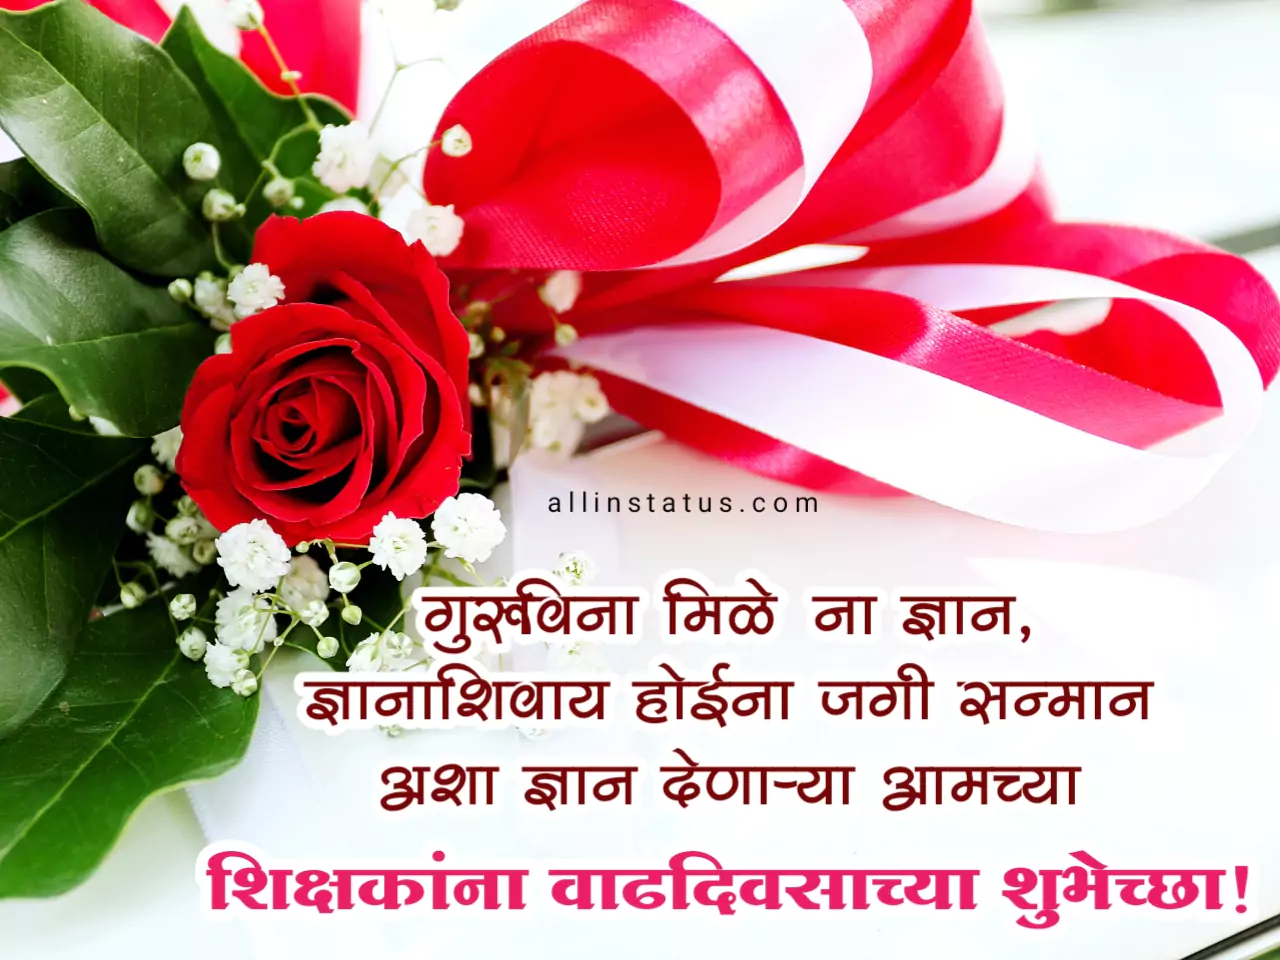 Happy Birthday wishes for teacher in marathi